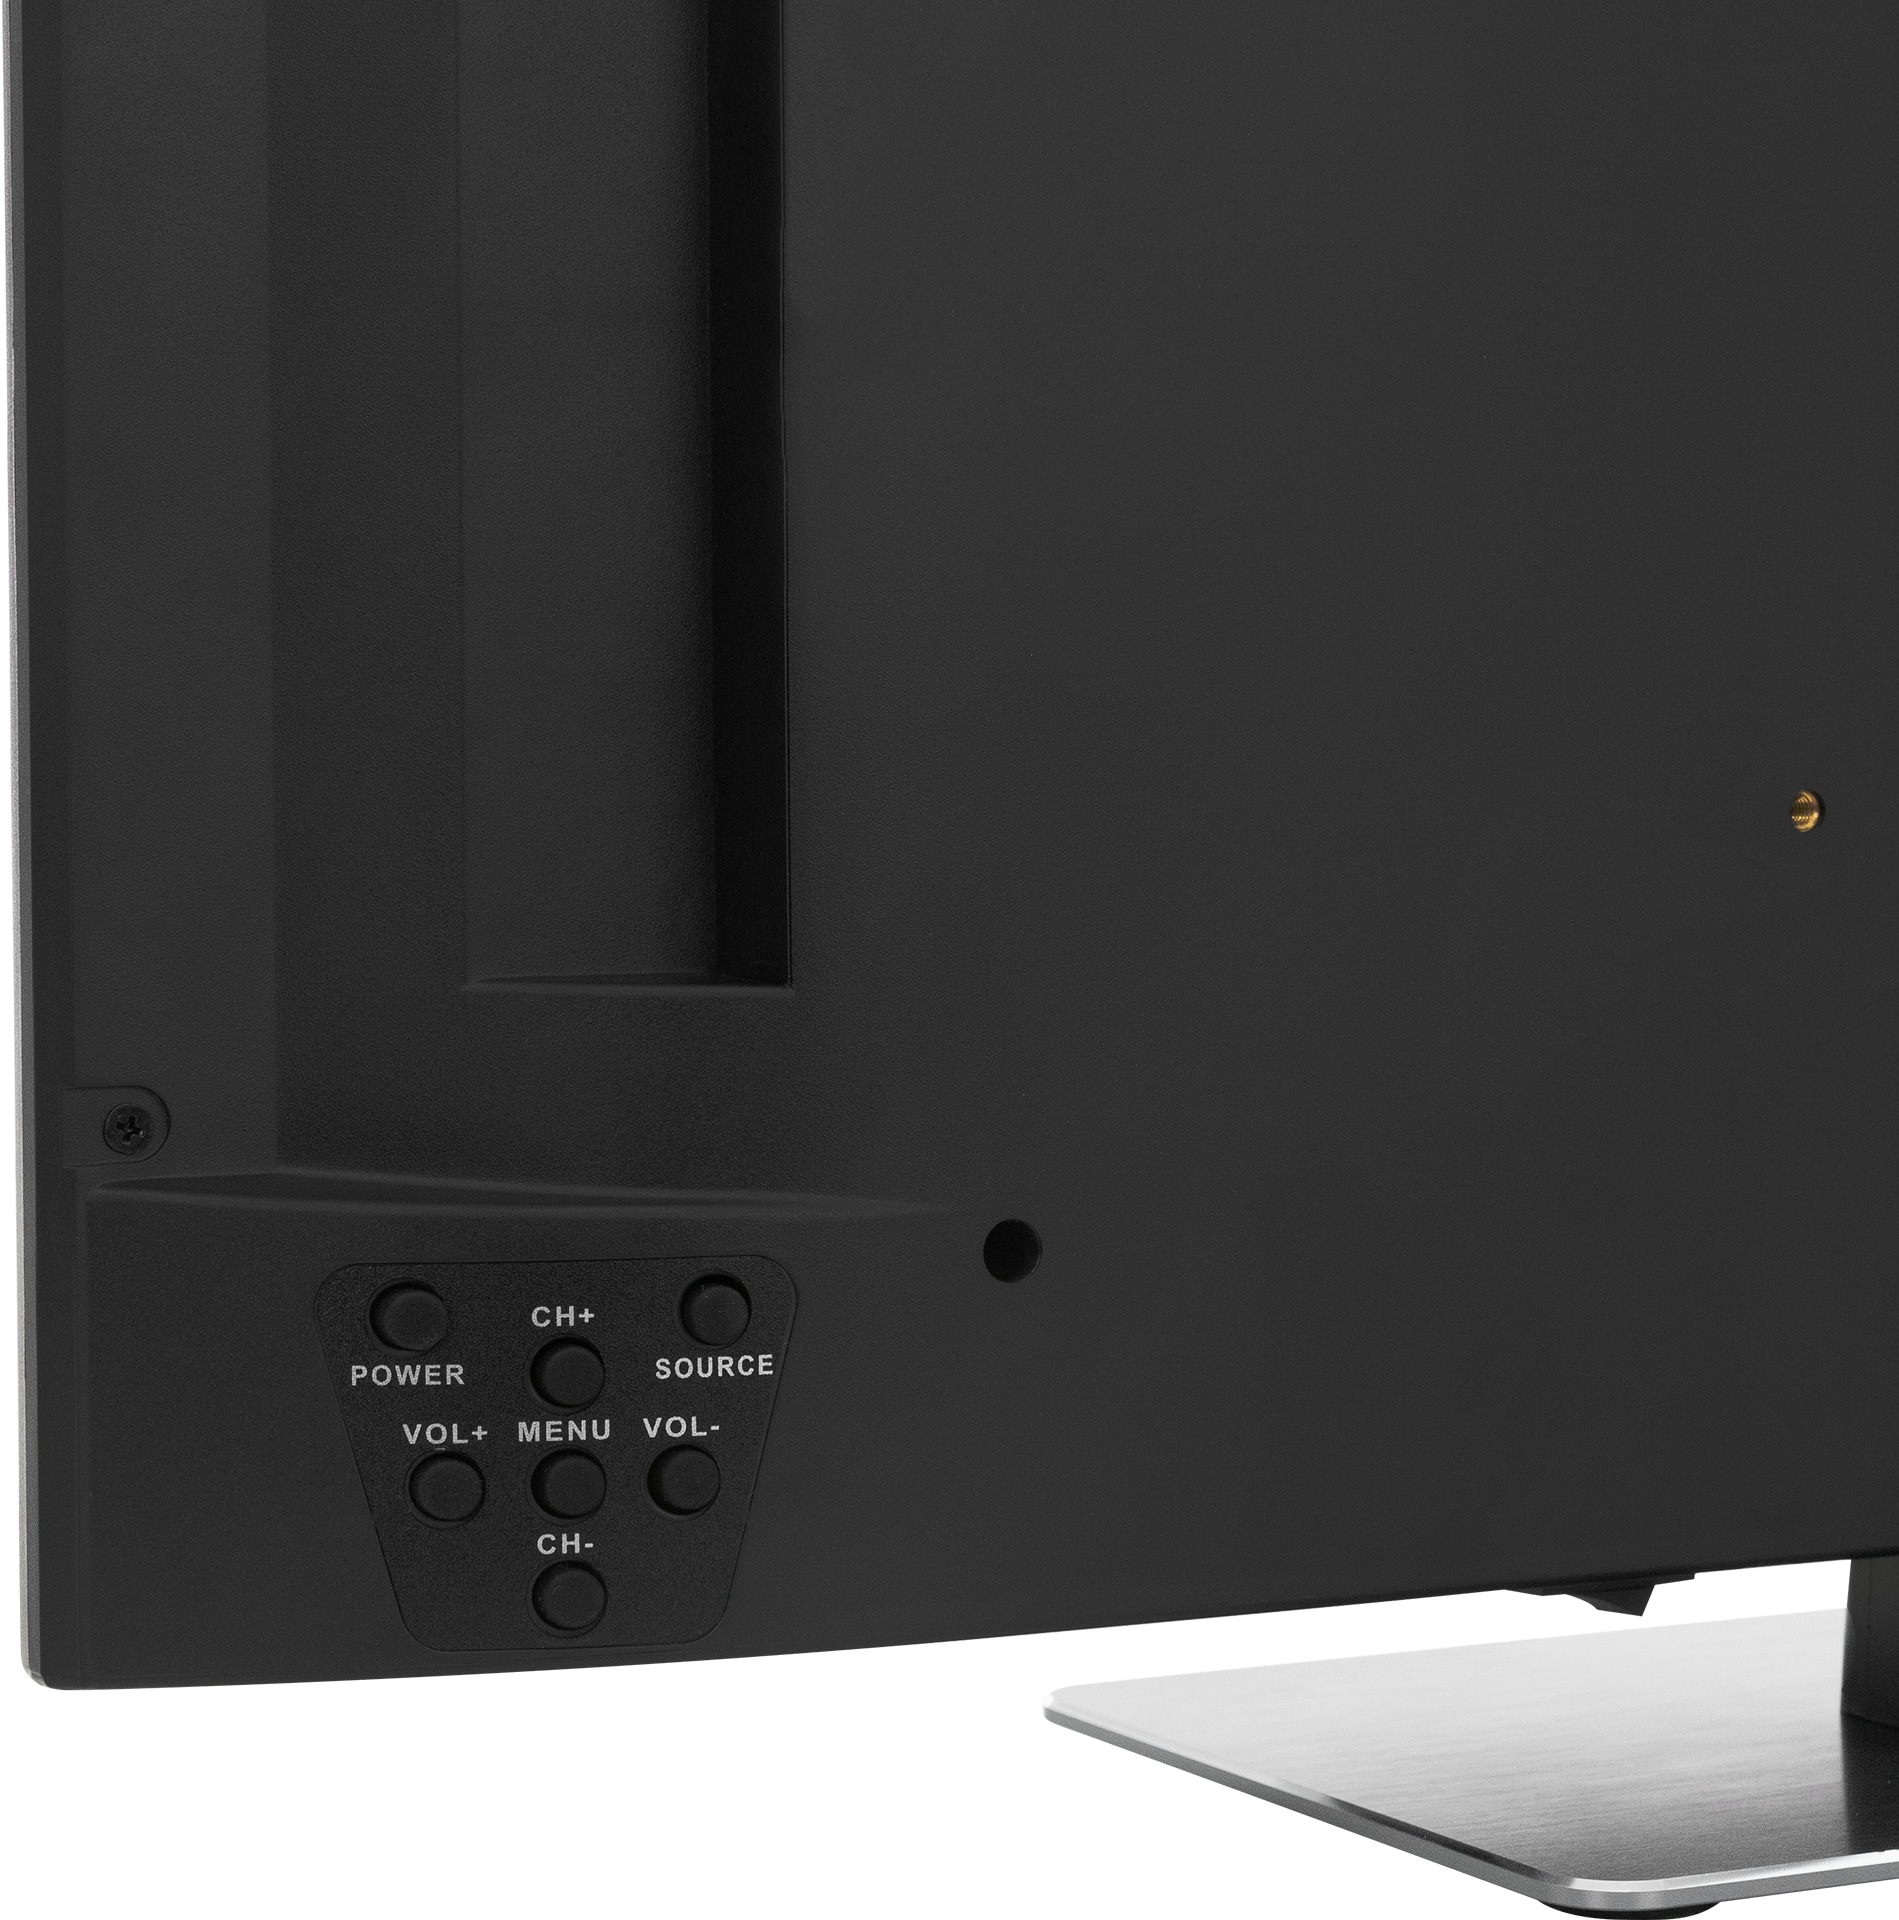 SELFSAT LED-TV Smart 1260, 61 cm (24"), EEK: F, HD-Tuner, WLAN, Bluetooth